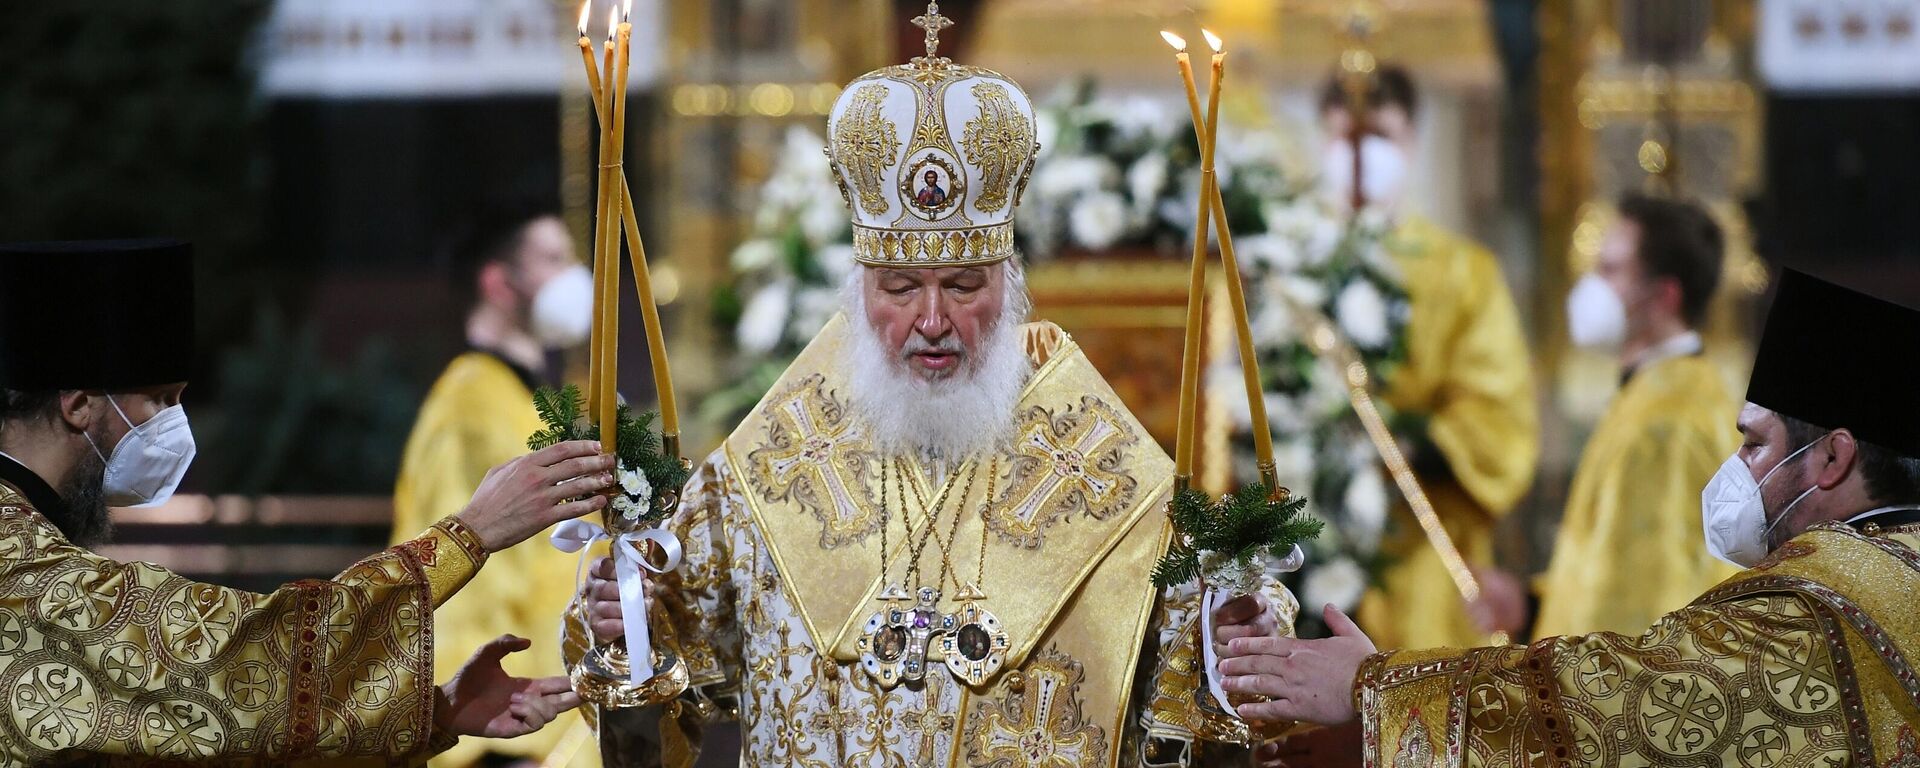 El patriarca ruso Kiril oficia la misa en la catedral moscovita de Cristo Salvador - Sputnik Mundo, 1920, 27.05.2022